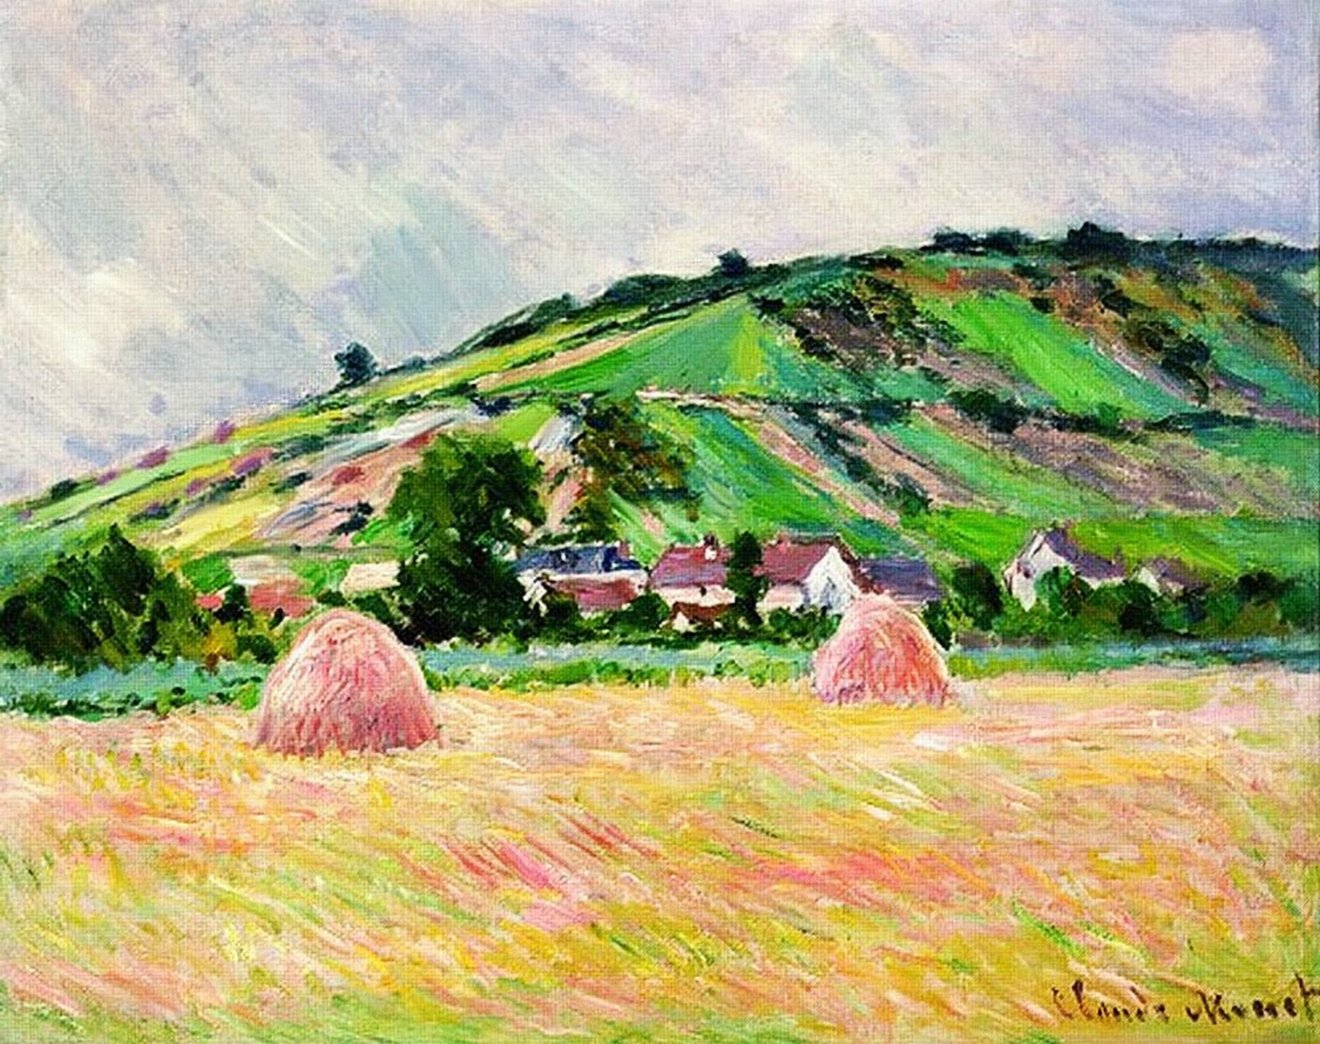 Claude+Monet-1840-1926 (297).jpg